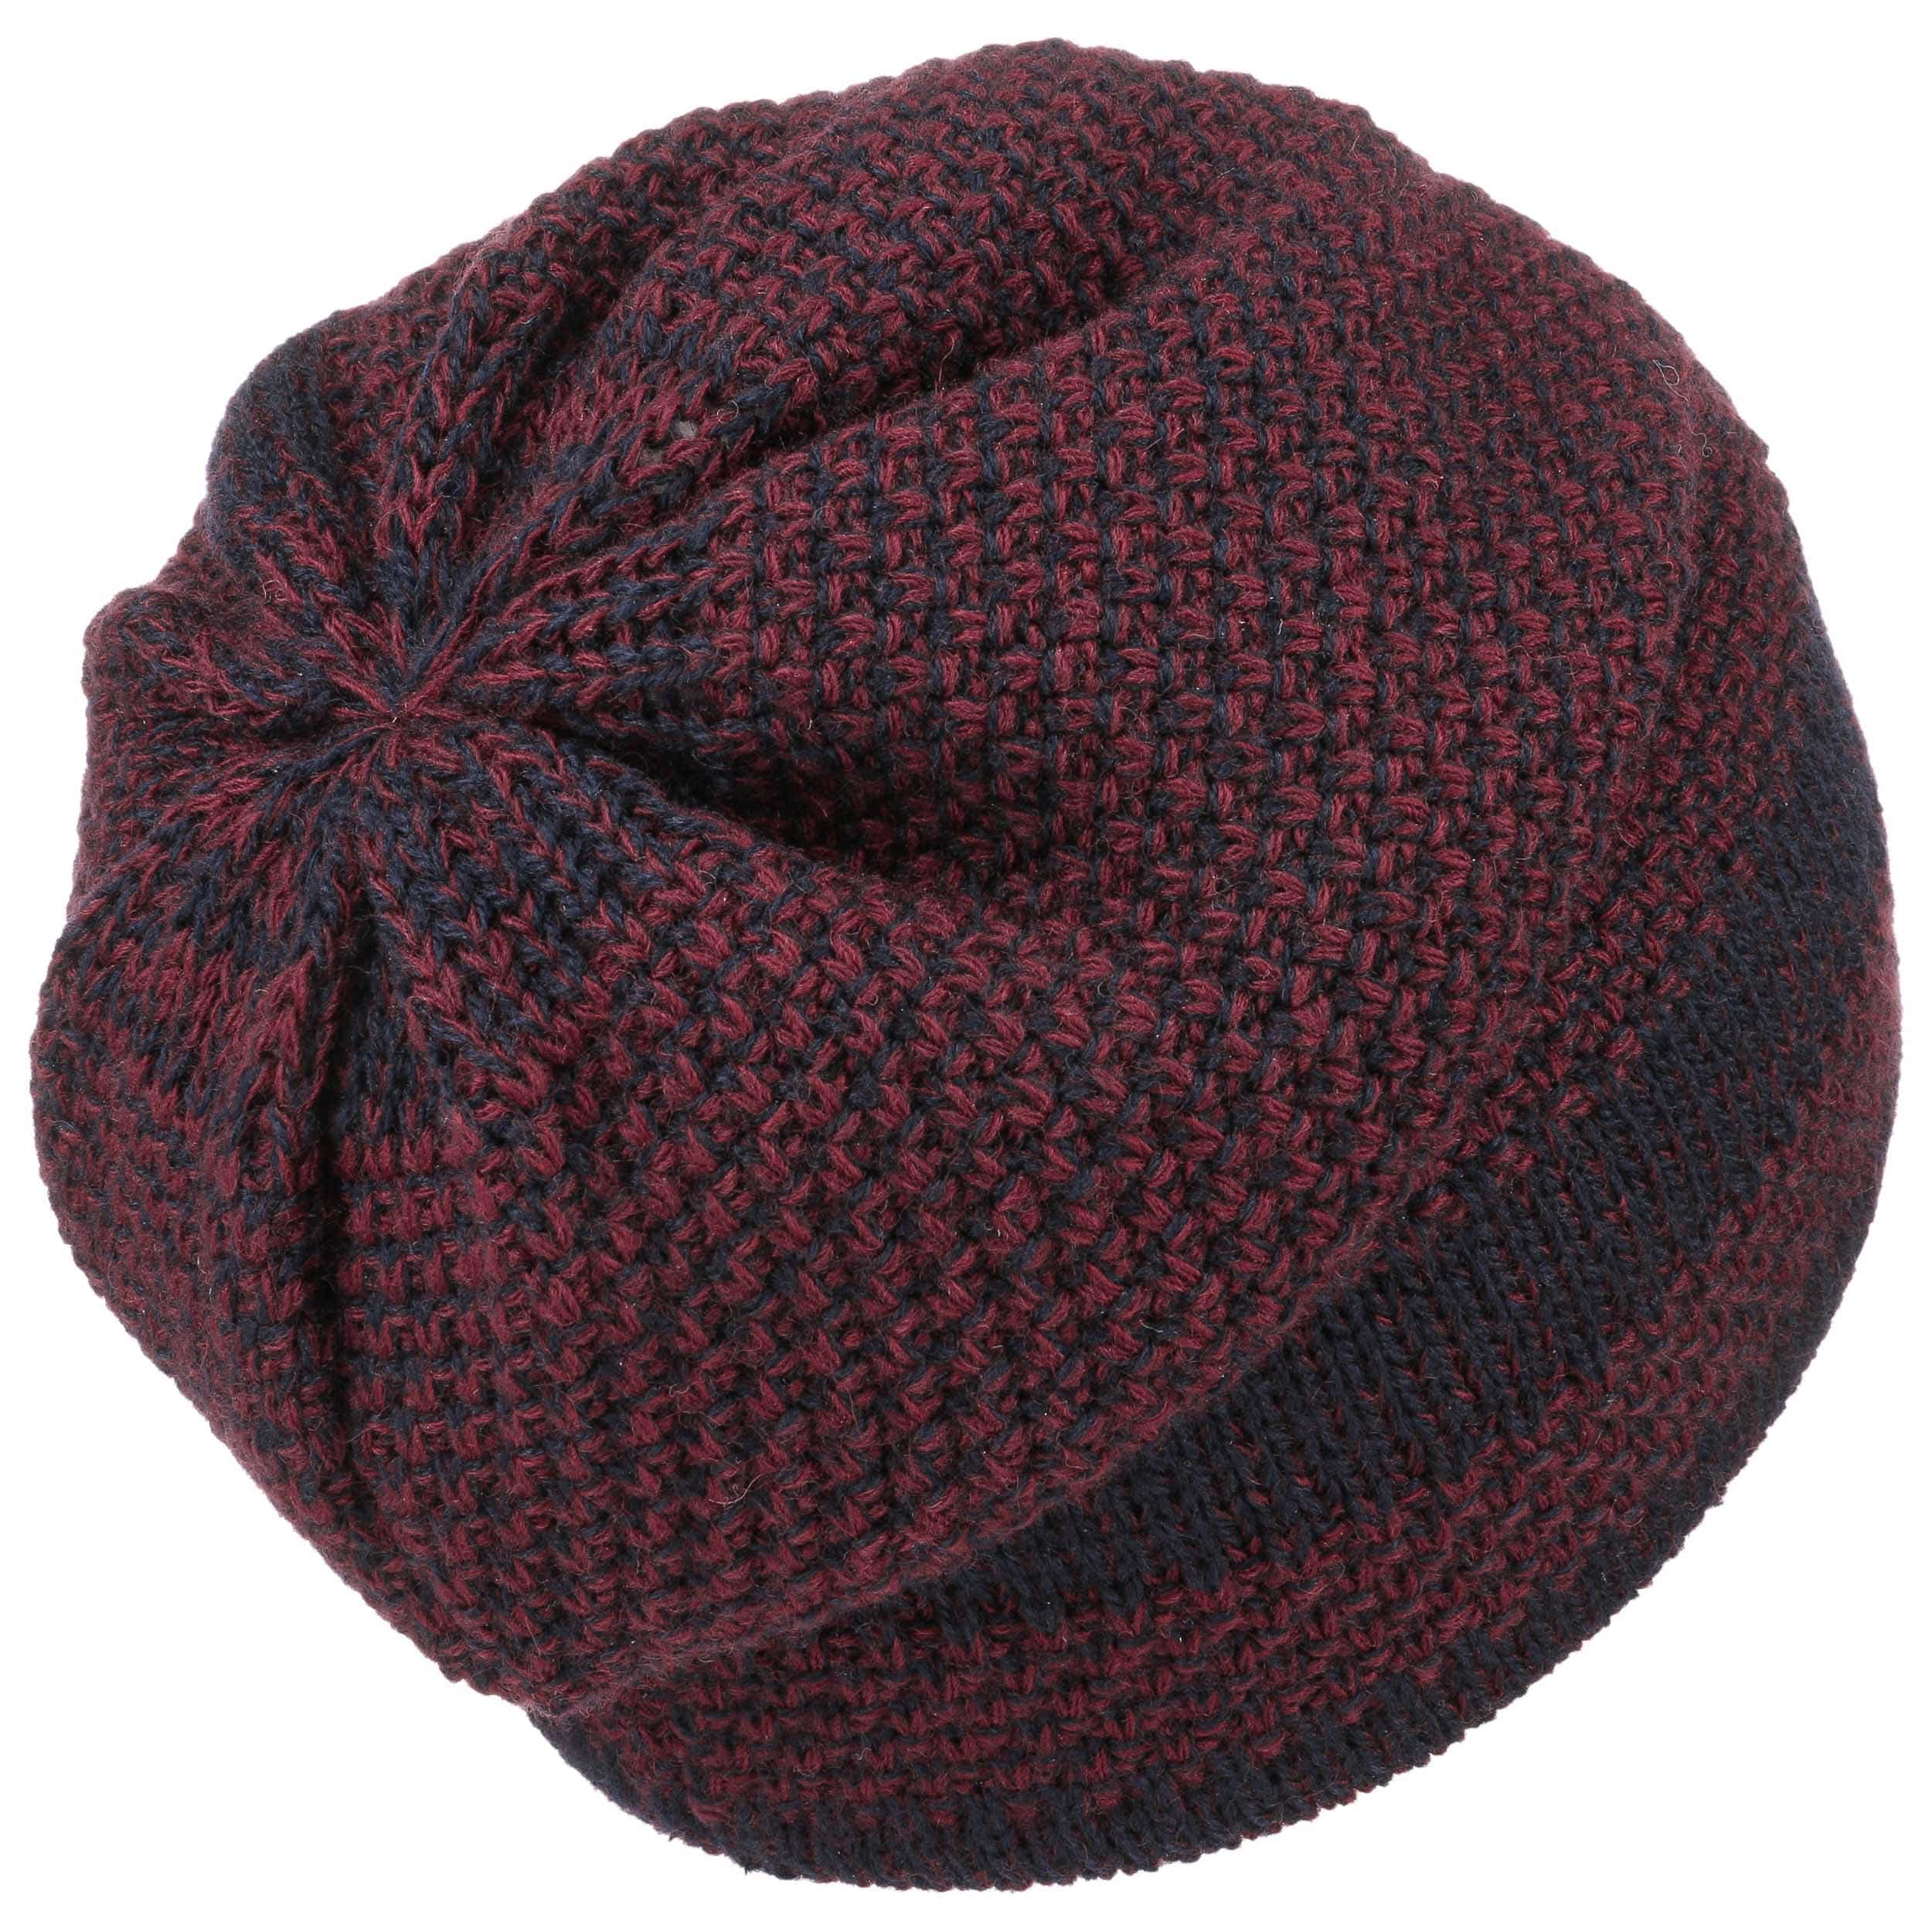 Twotone Knit Beanie by bugatti - 32,95